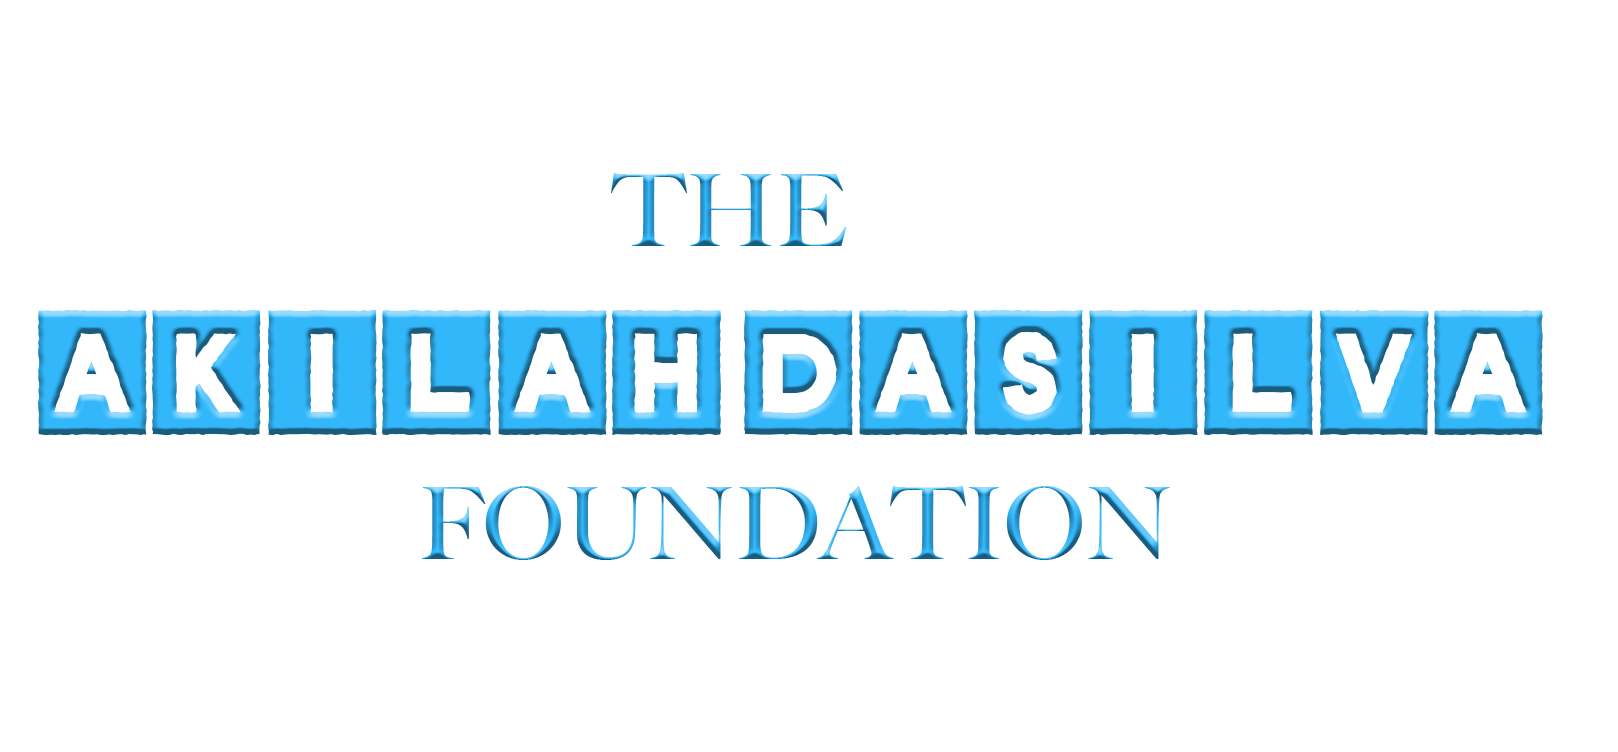 The Akilah Dasilva Foundation.png